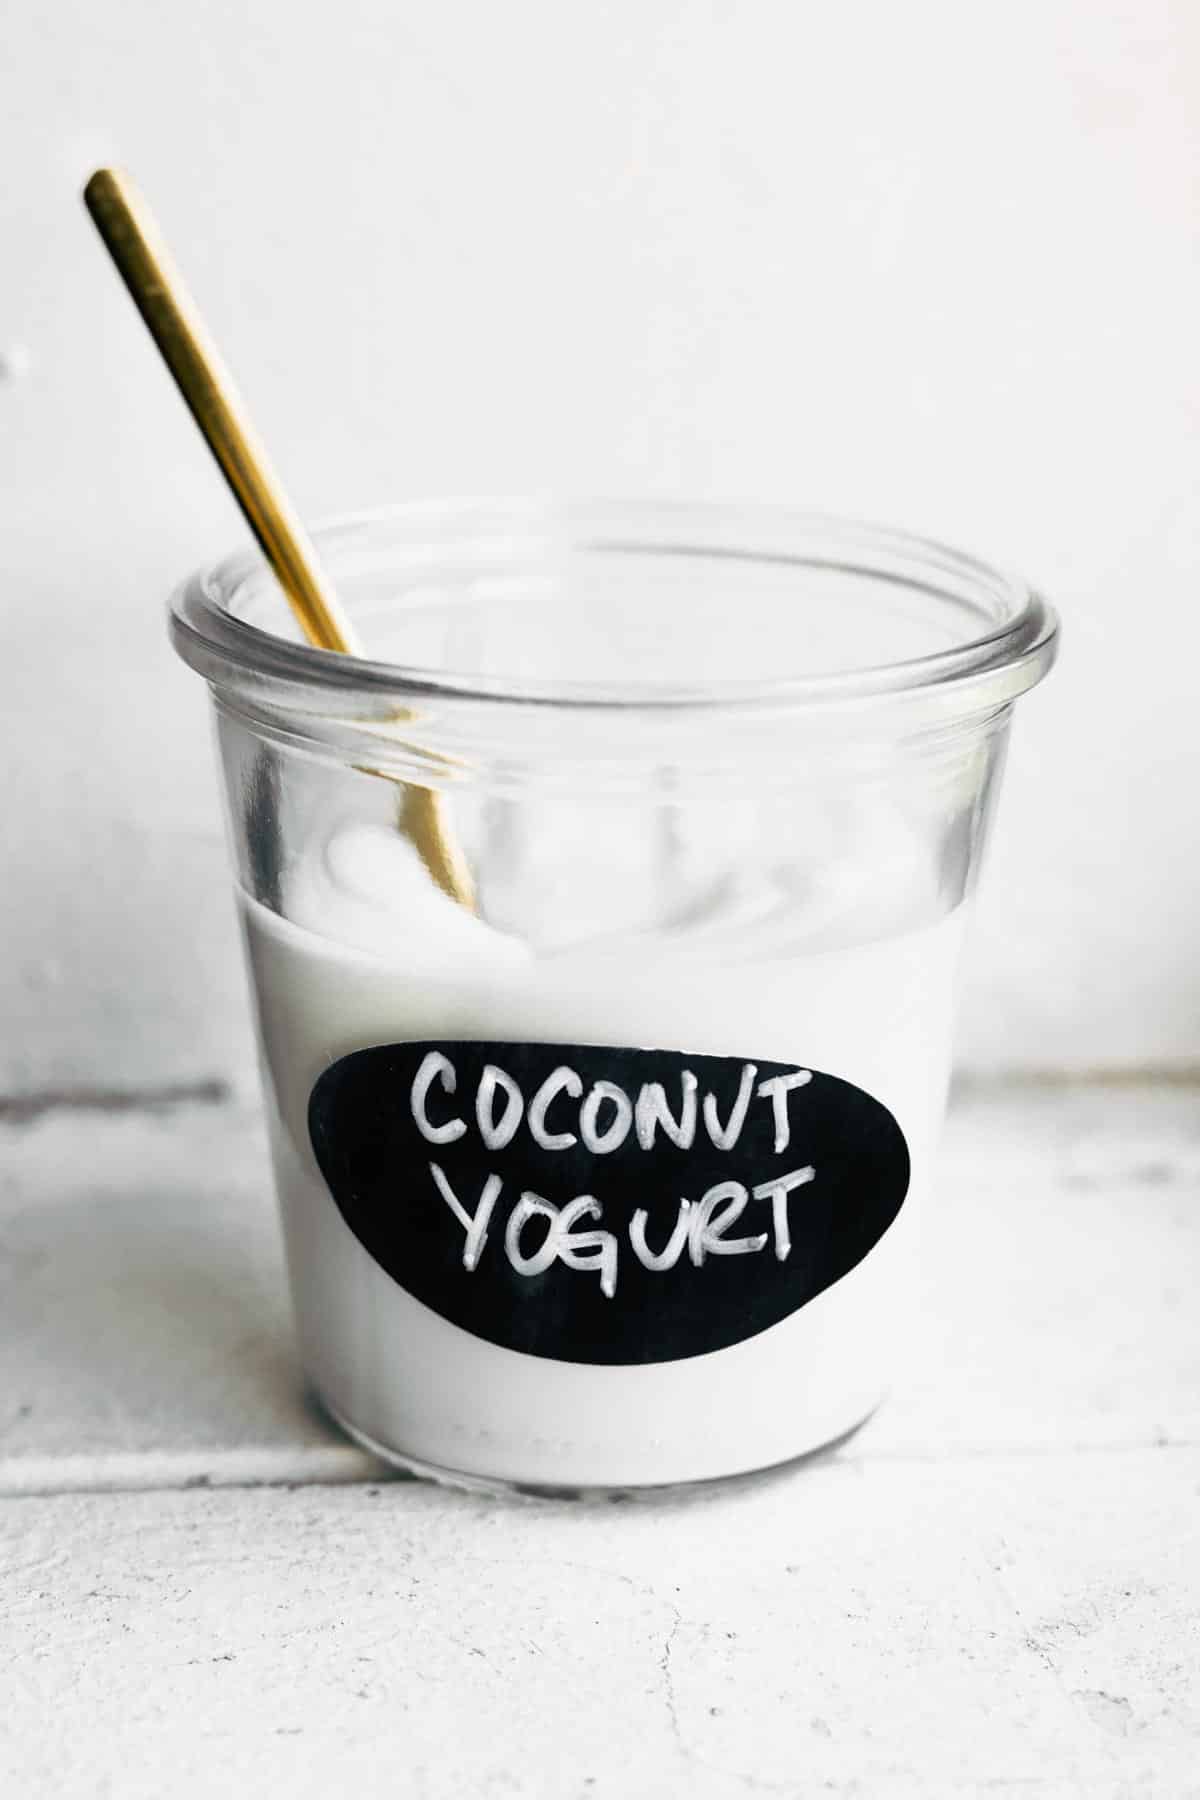 A glass jar labeled "coconut yogurt" full of homemade coconut milk yogurt.